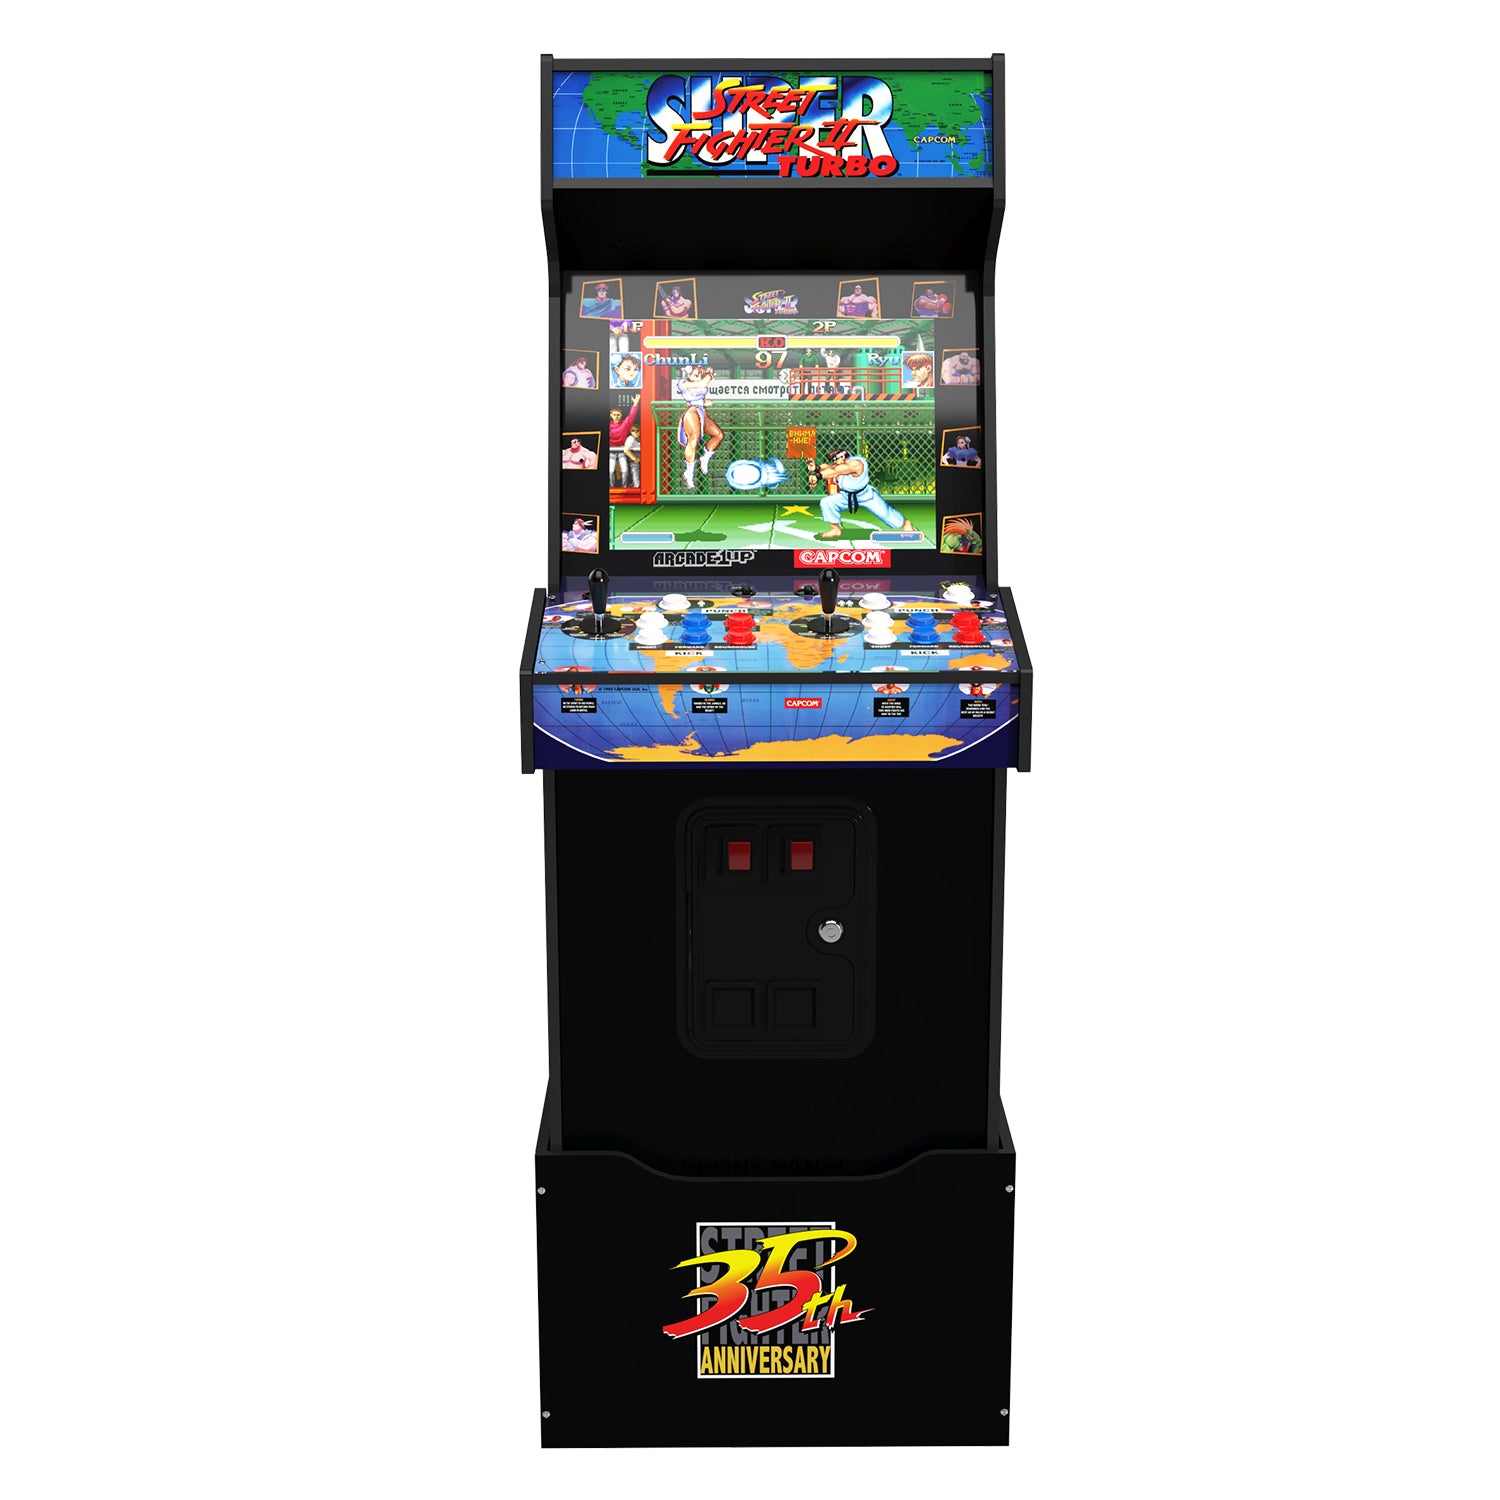 Capcom Legacy 35th Anniversary Arcade Game14-n-1 Shinku Hadoken Edition, Arcade1Up - image 3 of 8